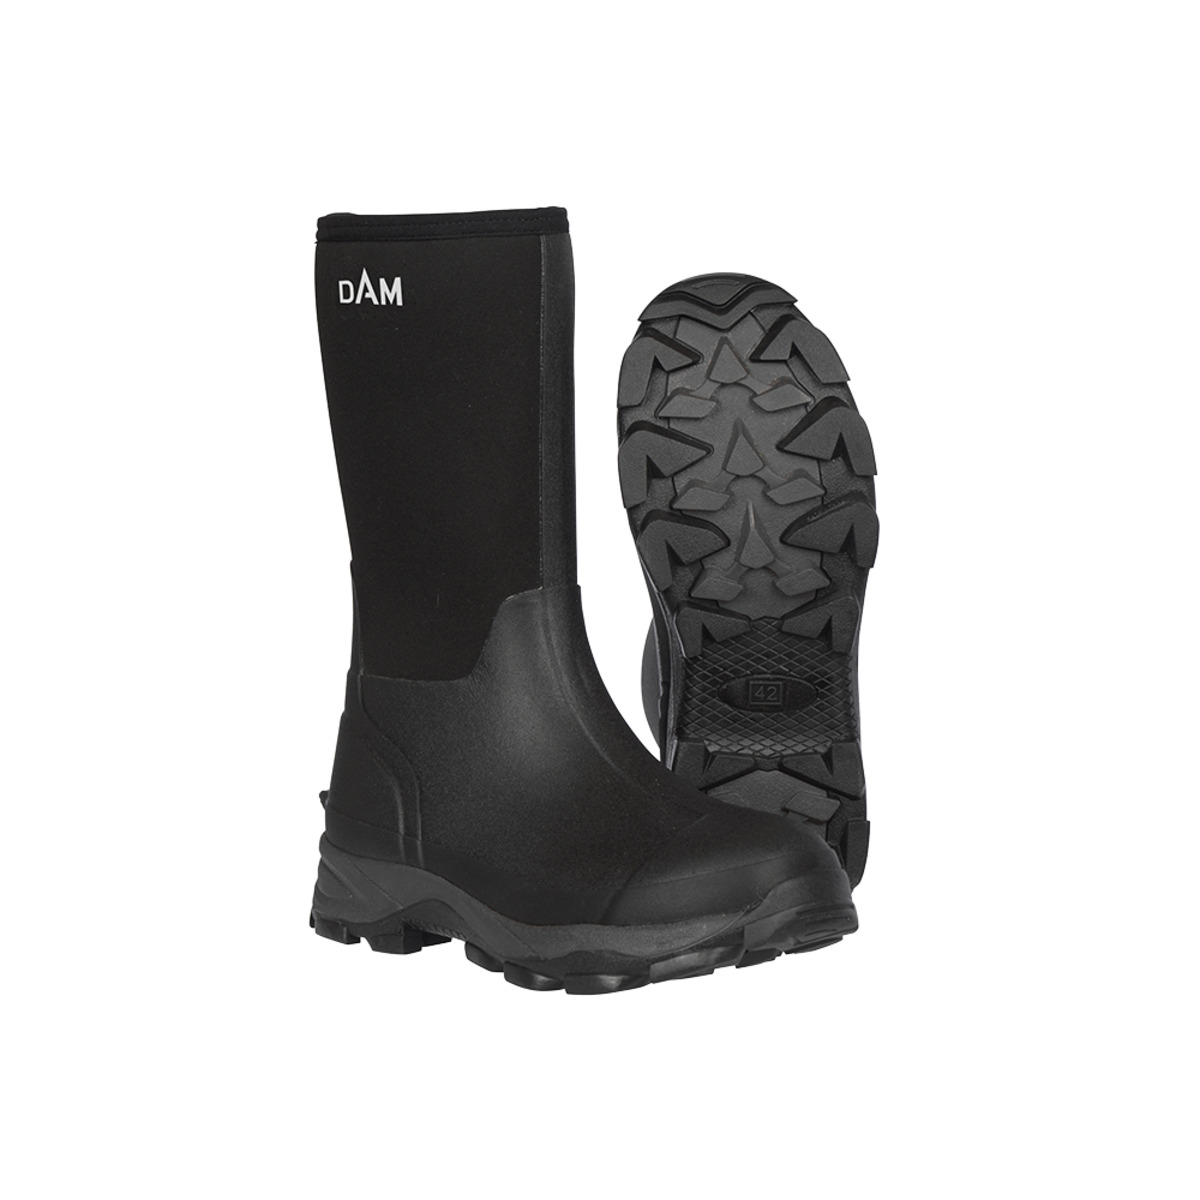 Dam Tira Boots Rubber/neoprene - 40/6 BLACK